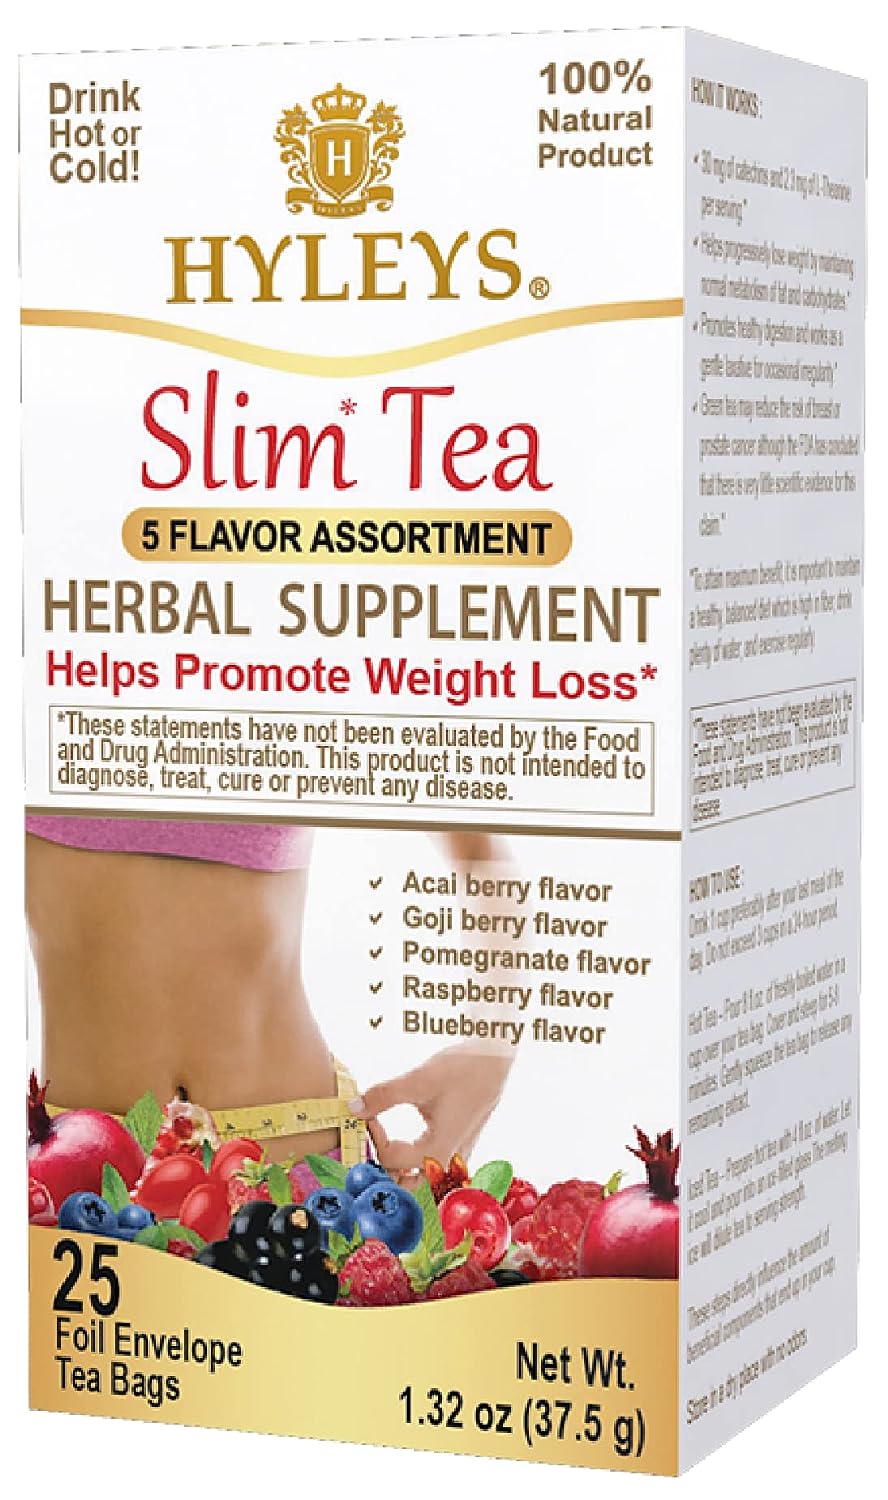 Hyleys Slim Tea 5 Flavor Assorted Tea -   Weight Loss